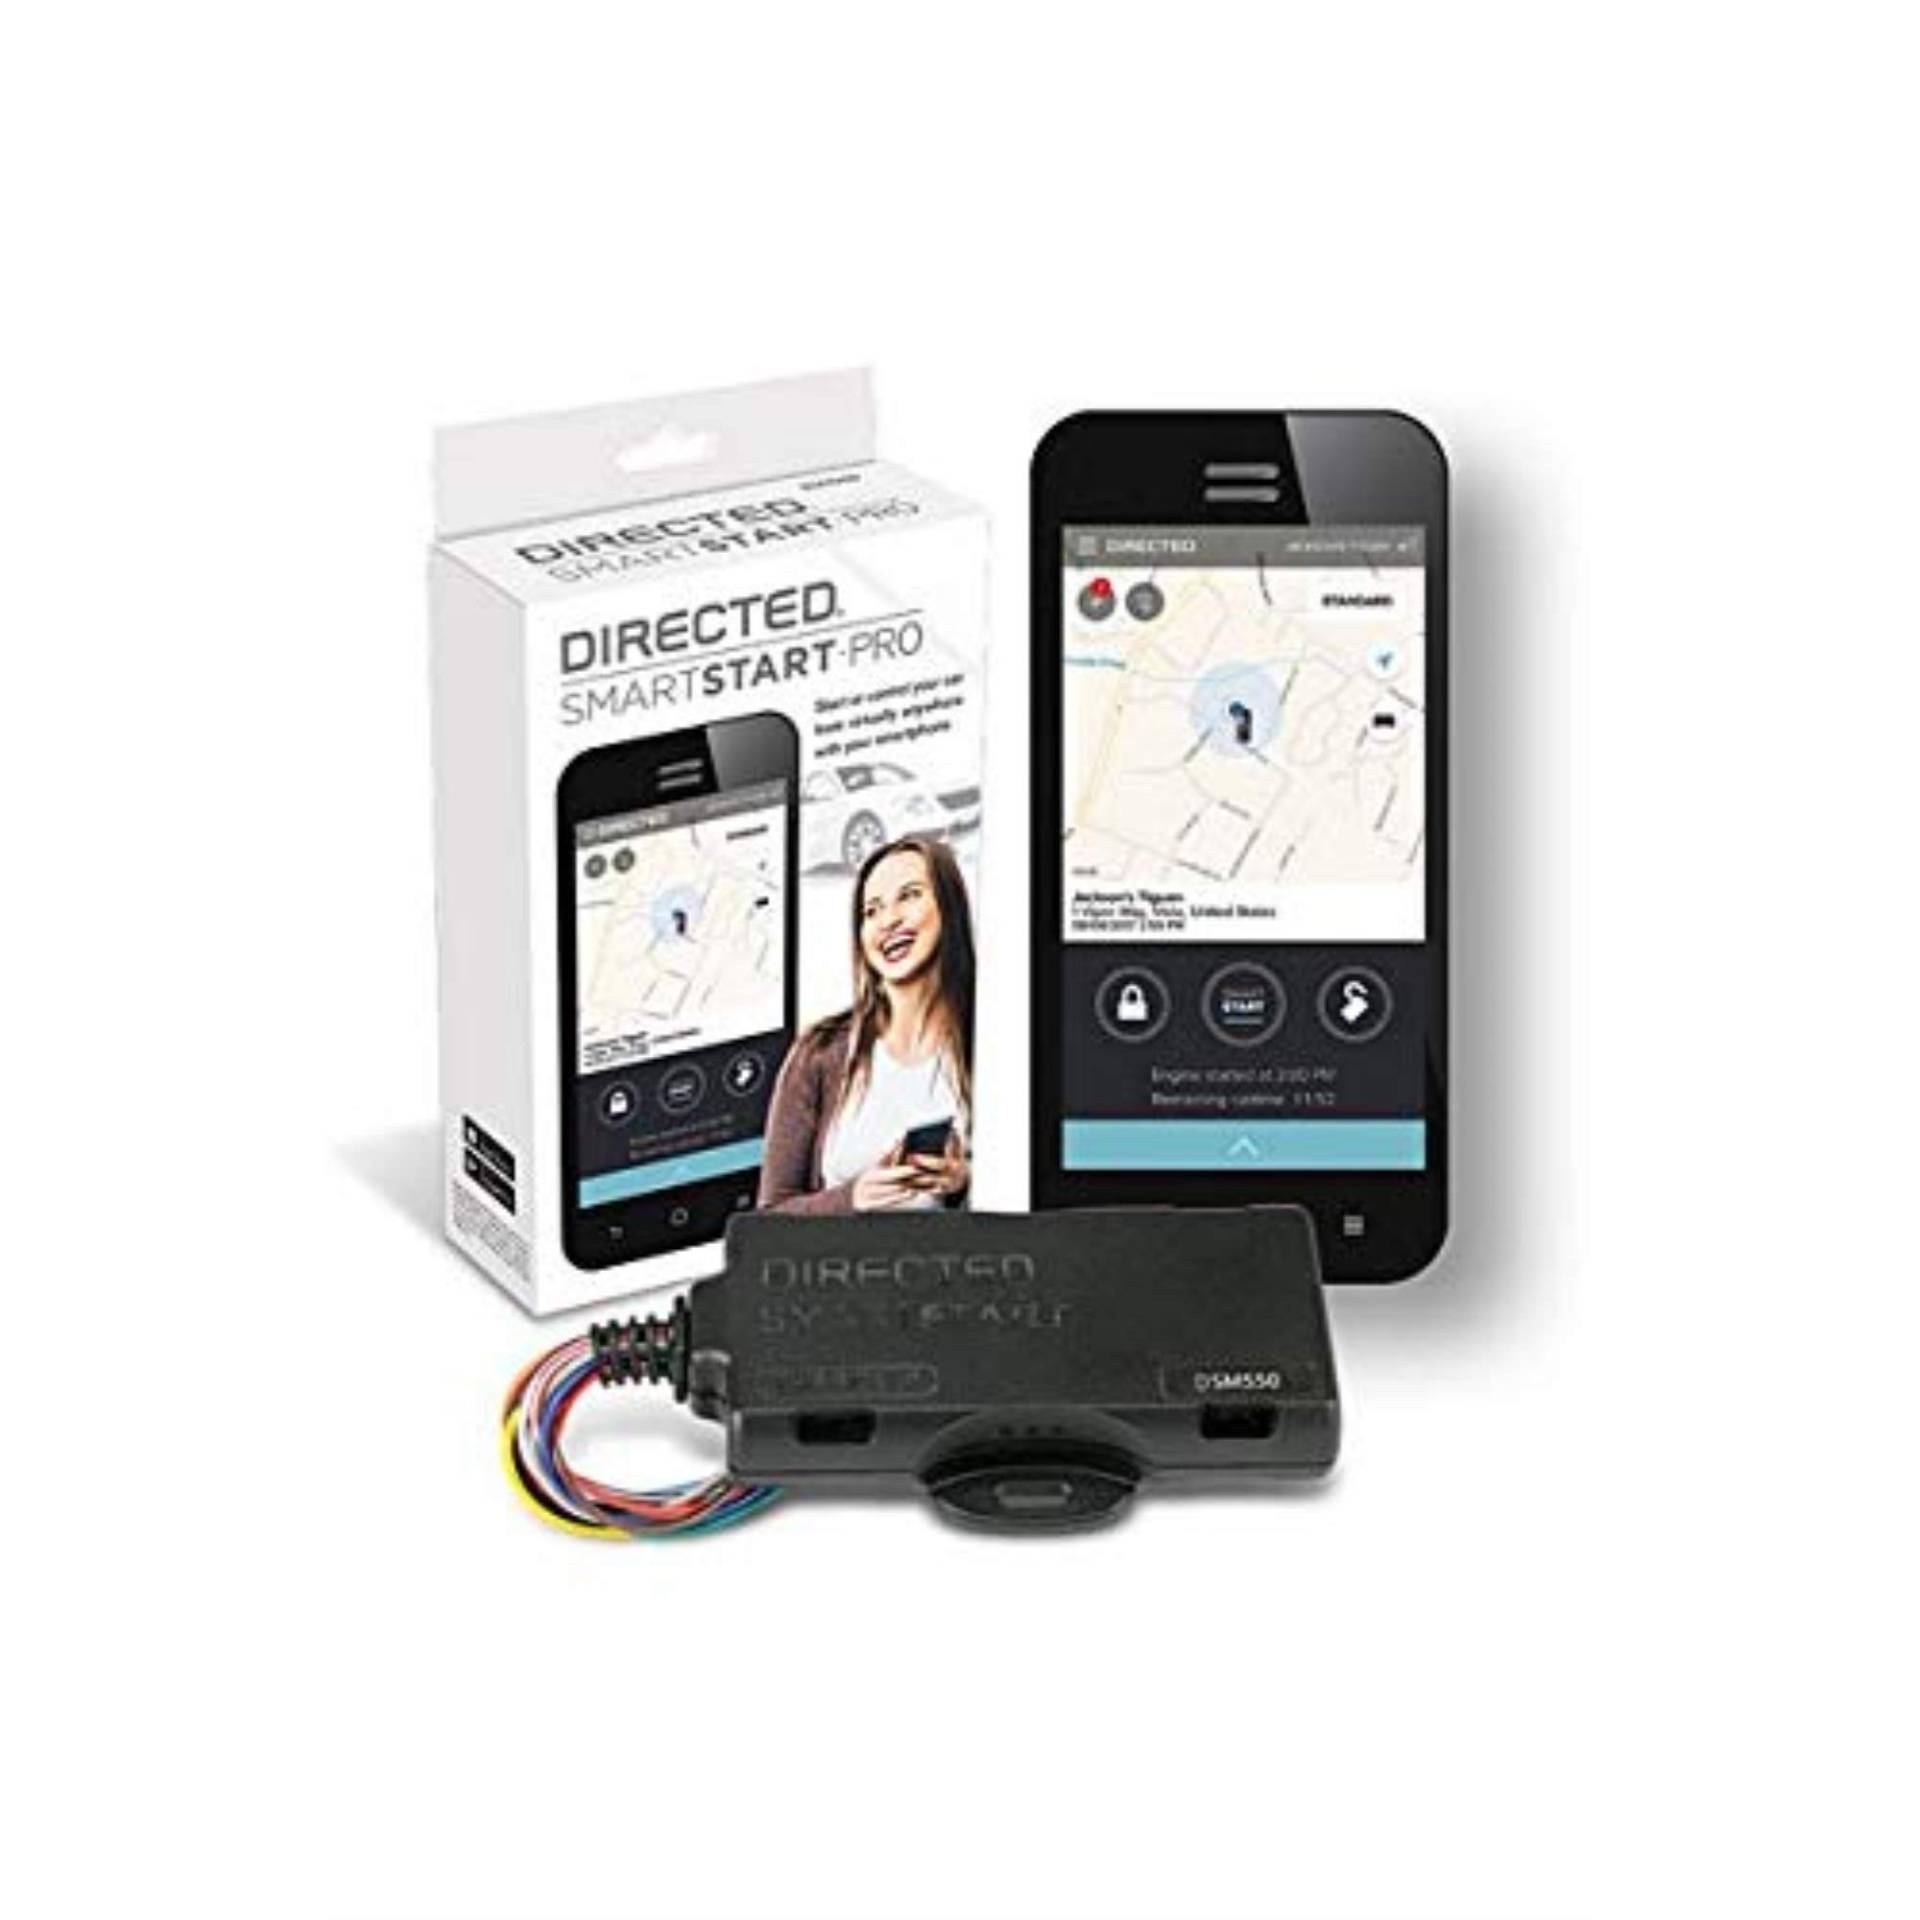 Directed Smartstart(r) DEIDSM550 16,5 x 9,9 x 3,7 cm SmartStart Pro 4G LTE GPS-Modul von Directed Electronics